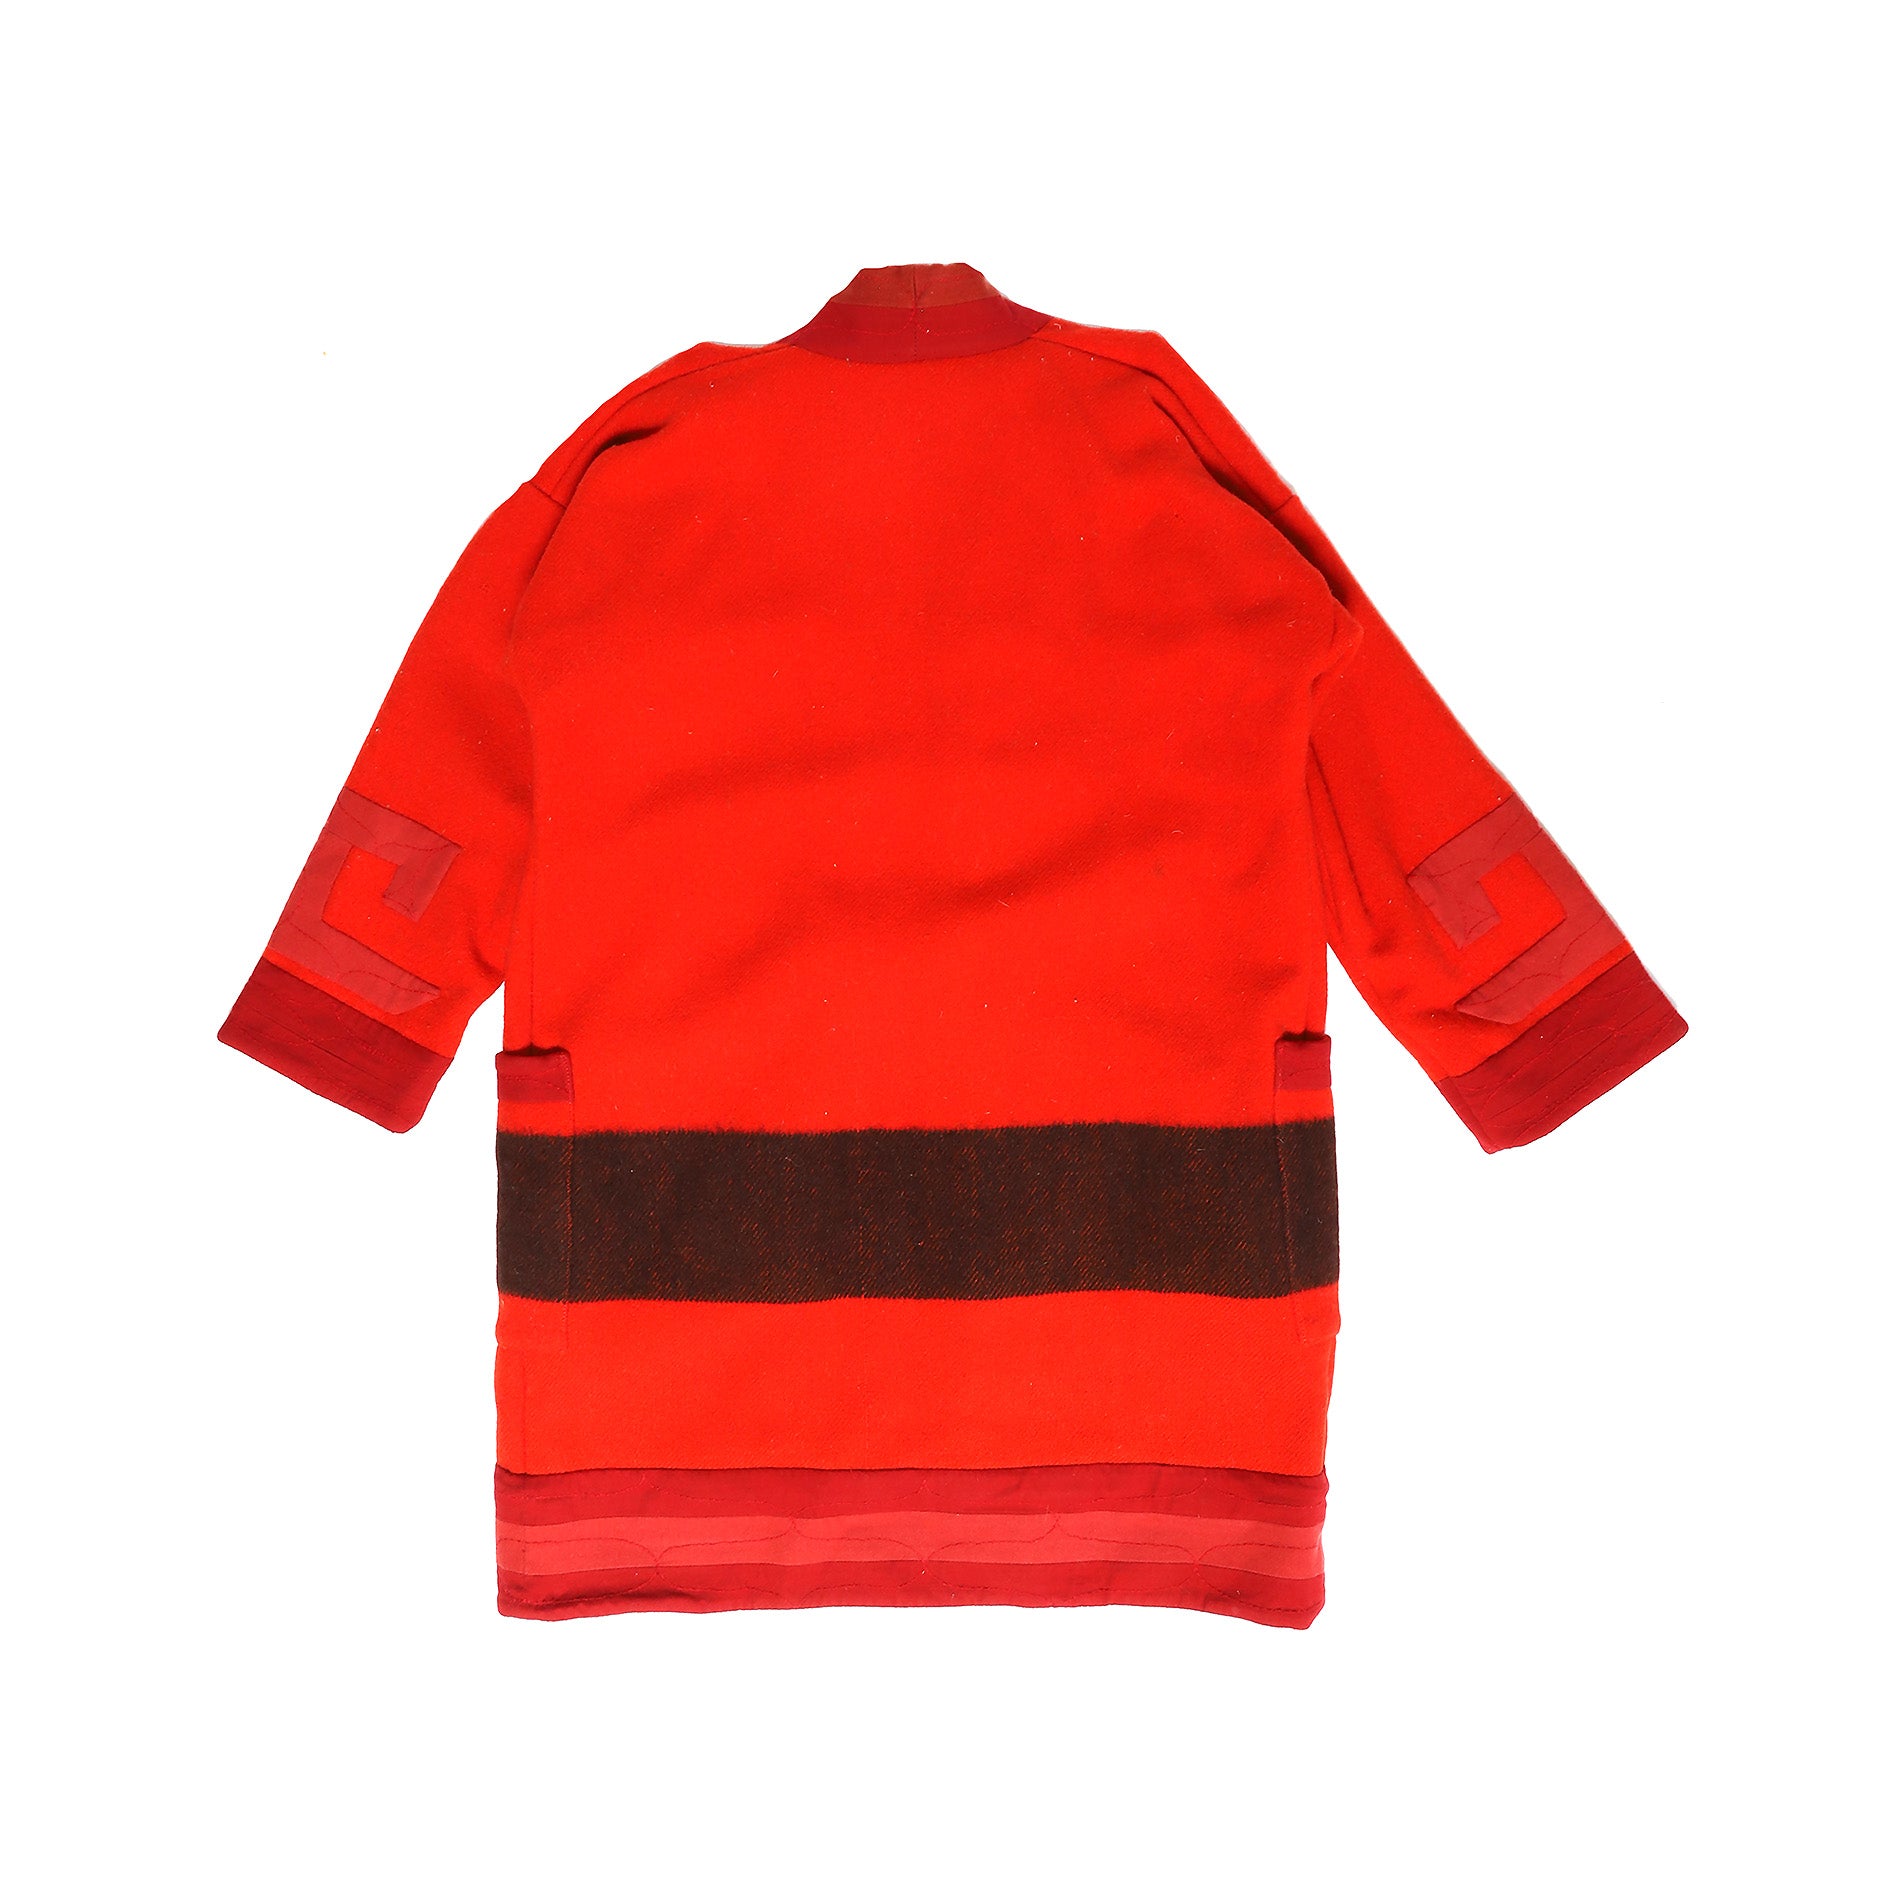 Visvim F.I.L. Indigo Camping Trailer Ruunpe Patchwork Red Kimono Wool Overcoat